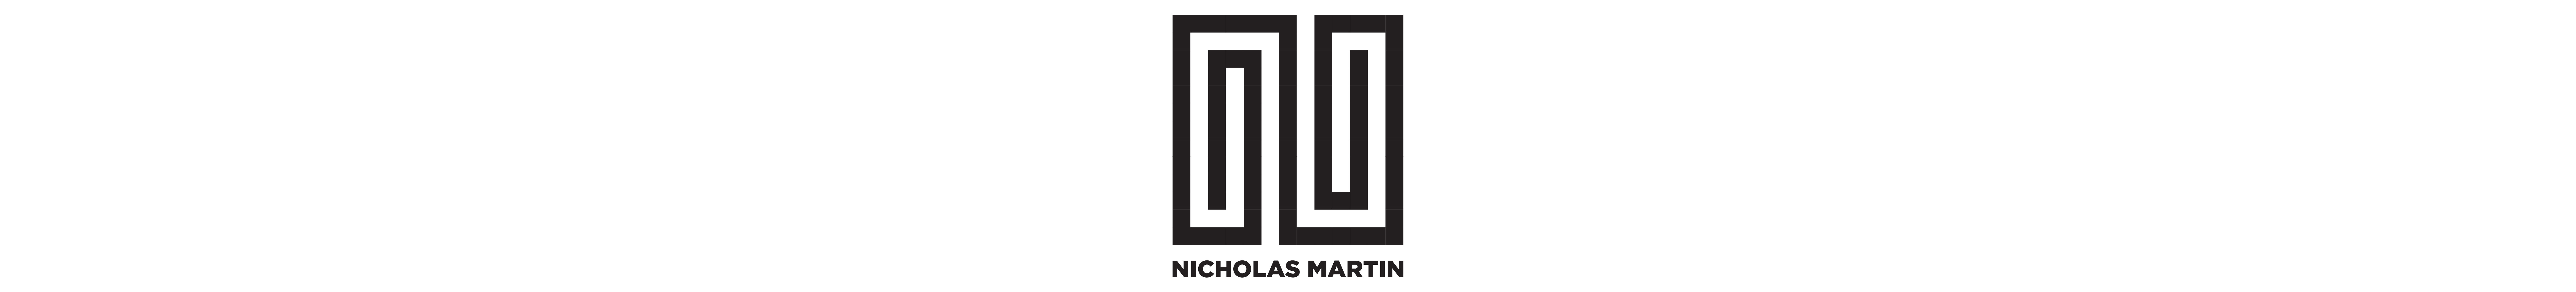 Nicholas Martins profilbanner